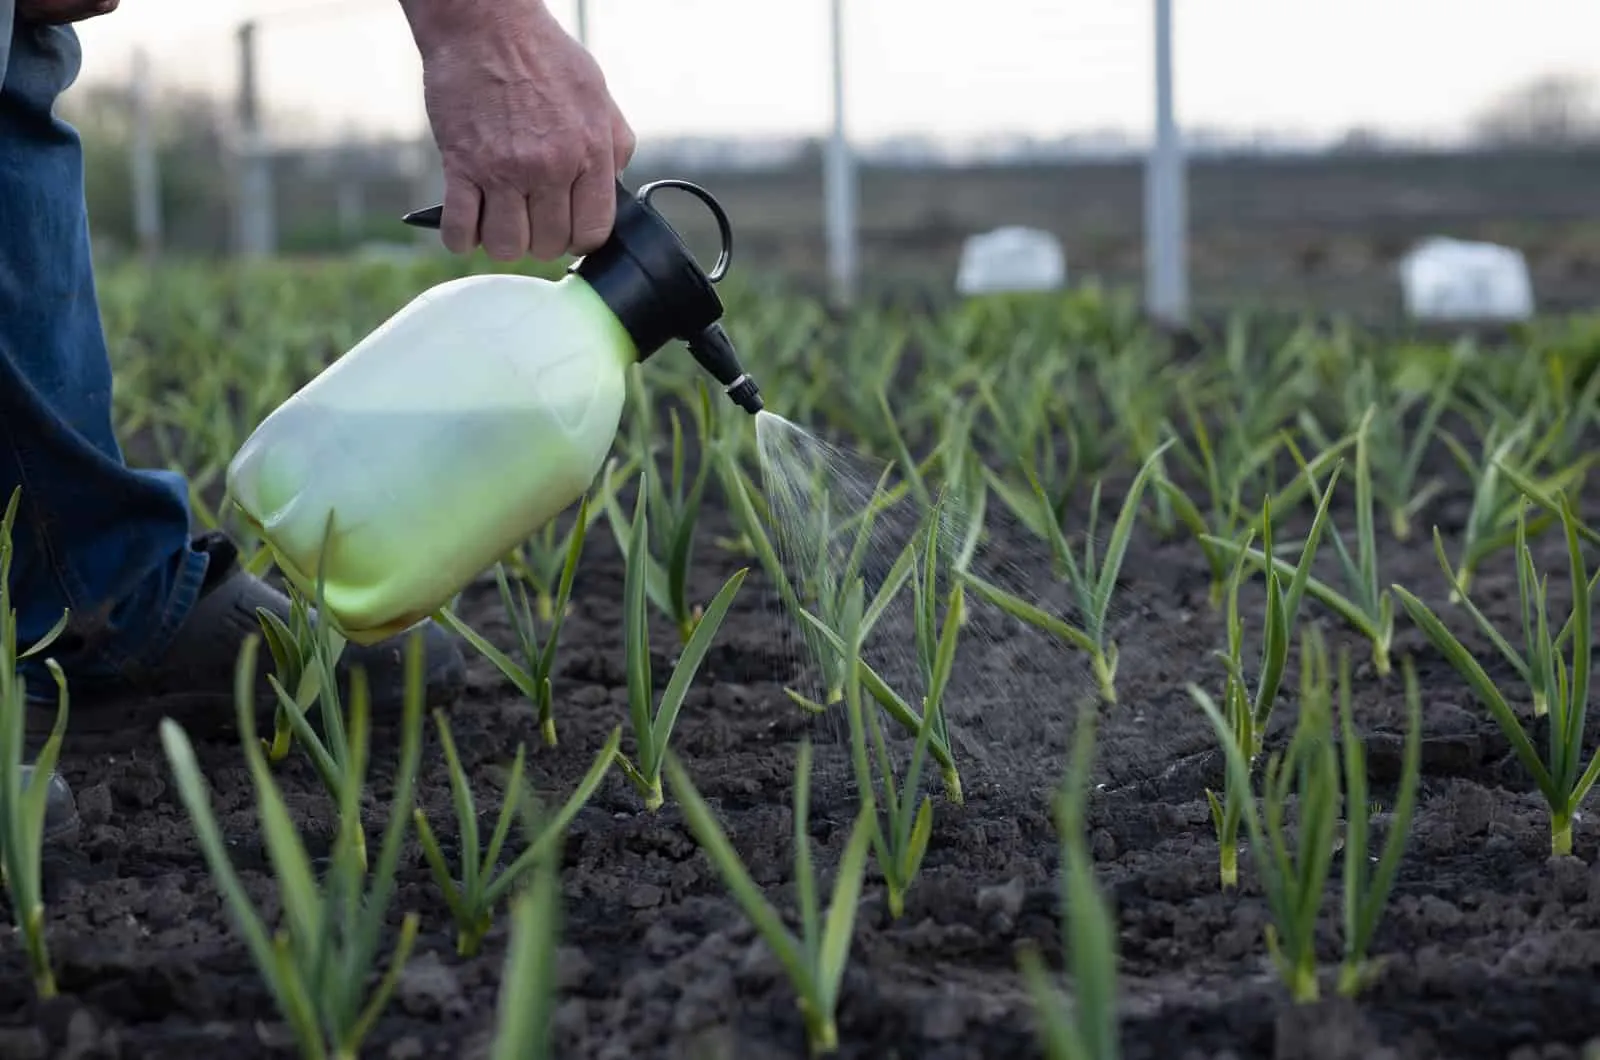 spraying plant food on onions